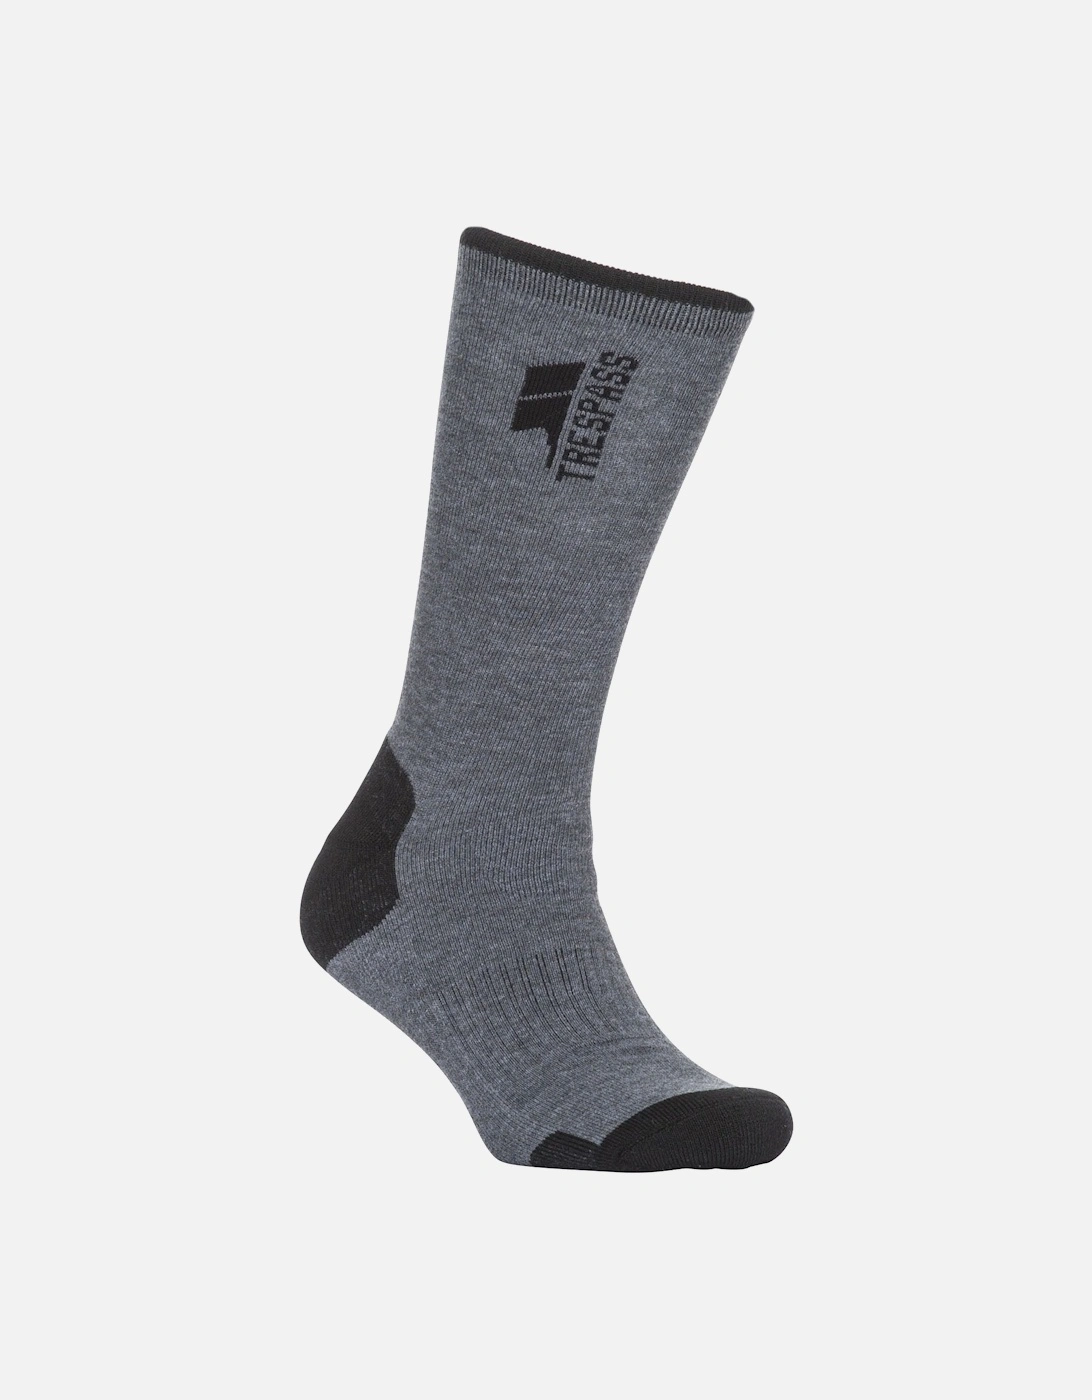 Mens Wayfarer Walking Socks - Carbon Marl - 7-11 UK, 6 of 5